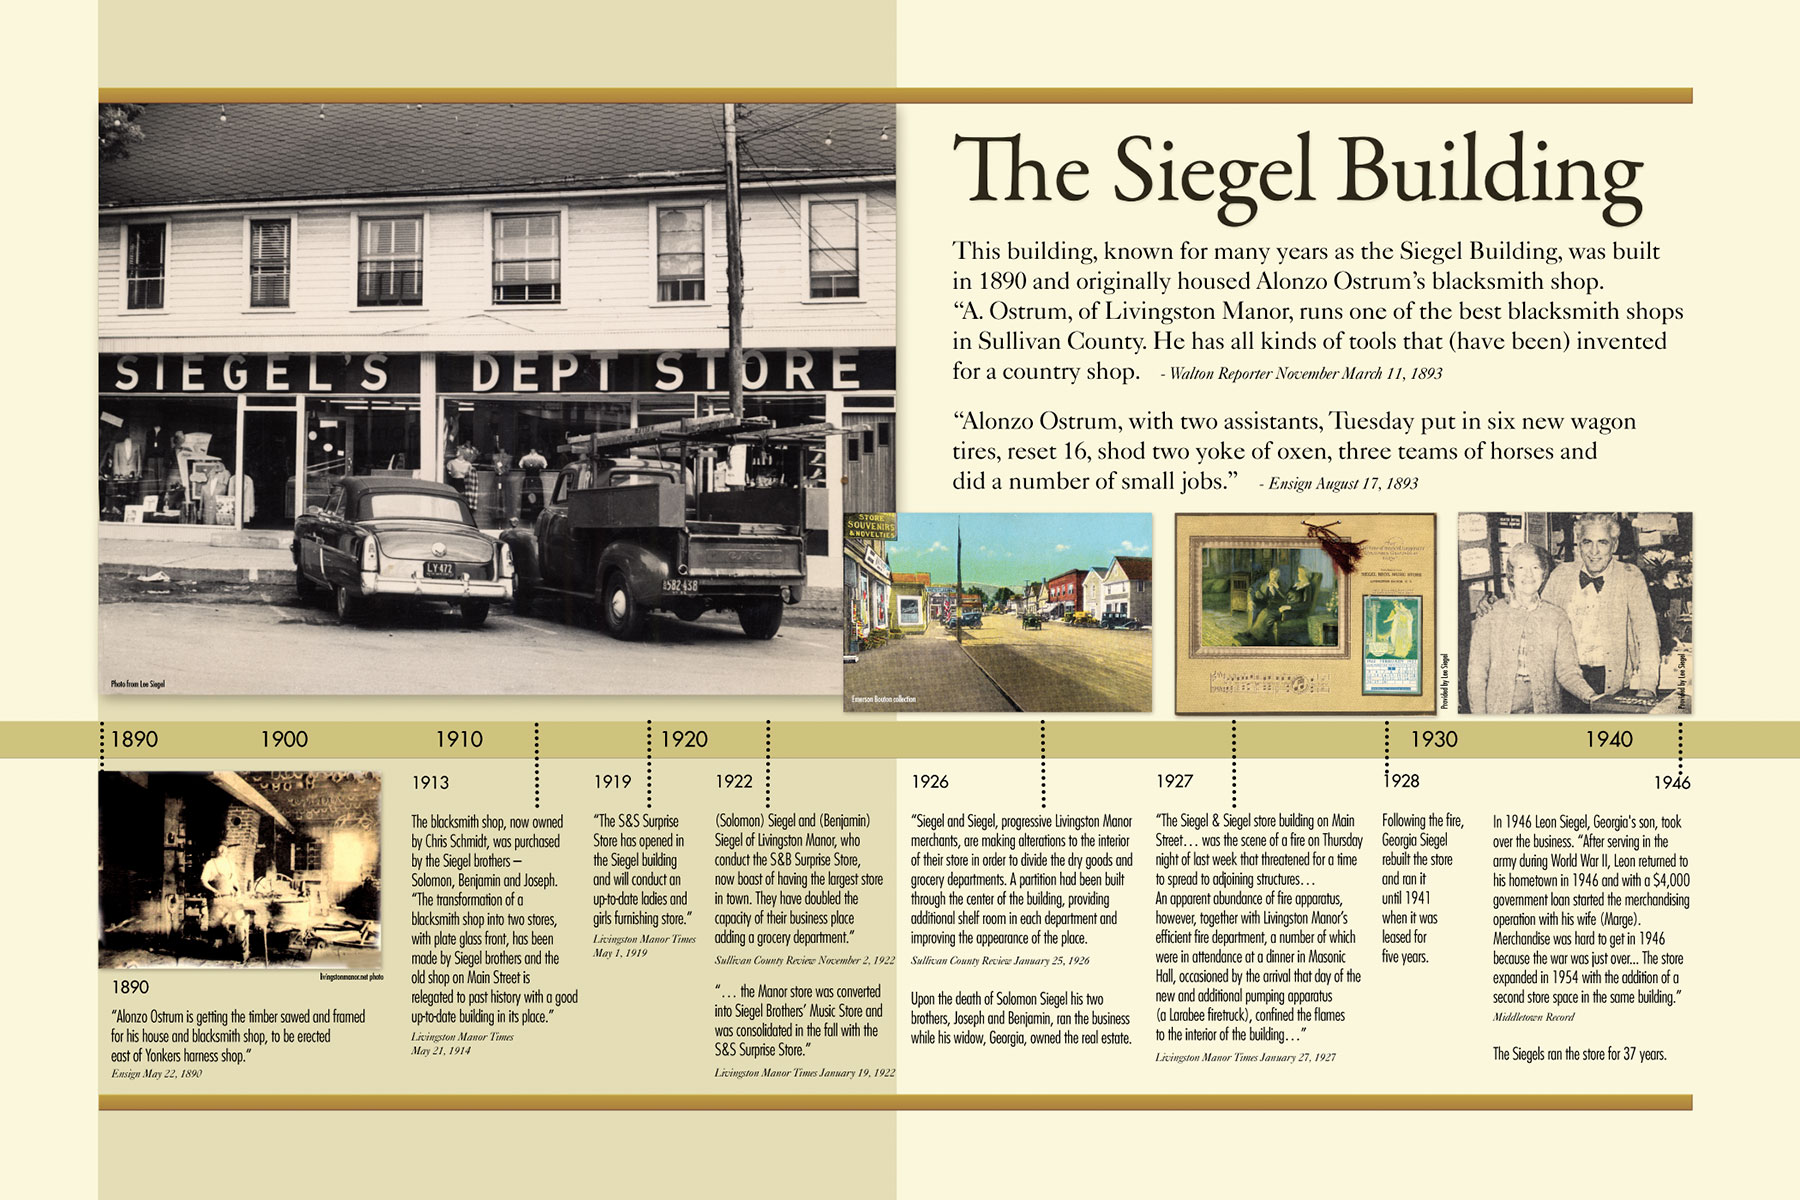 The Siegel Building